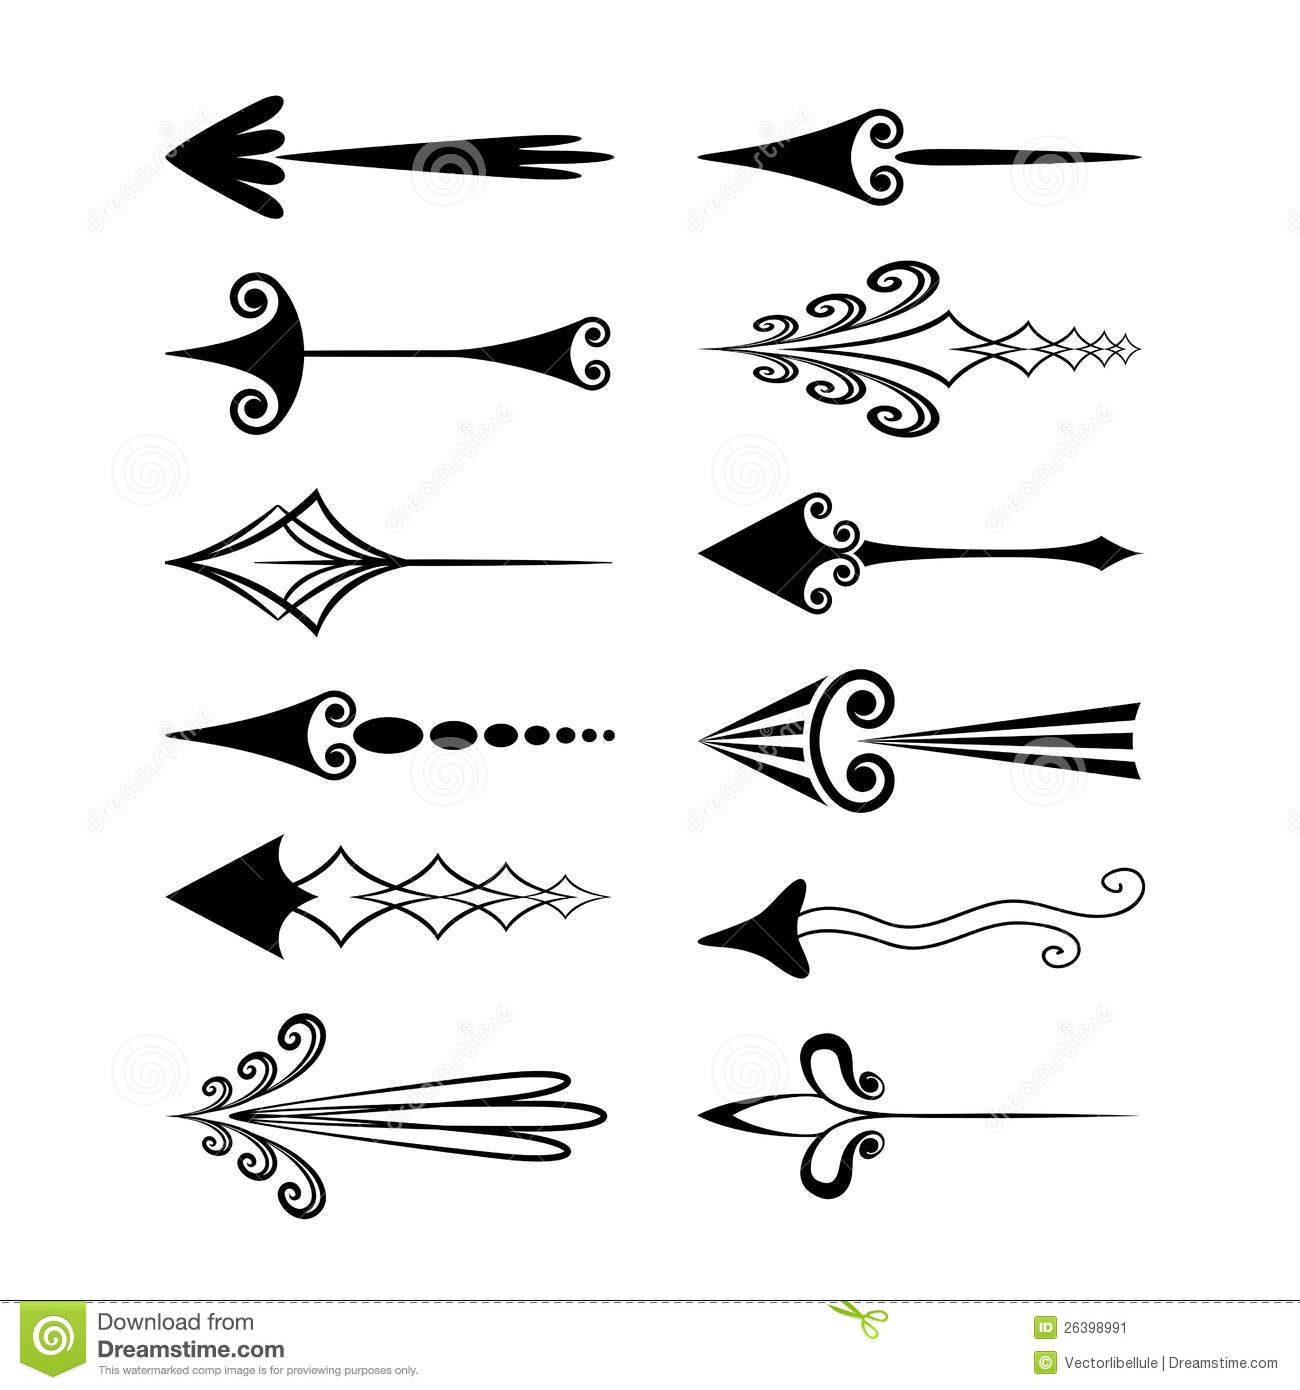 Vintage Arrows Or Cursors Stock Image   Image  26398991